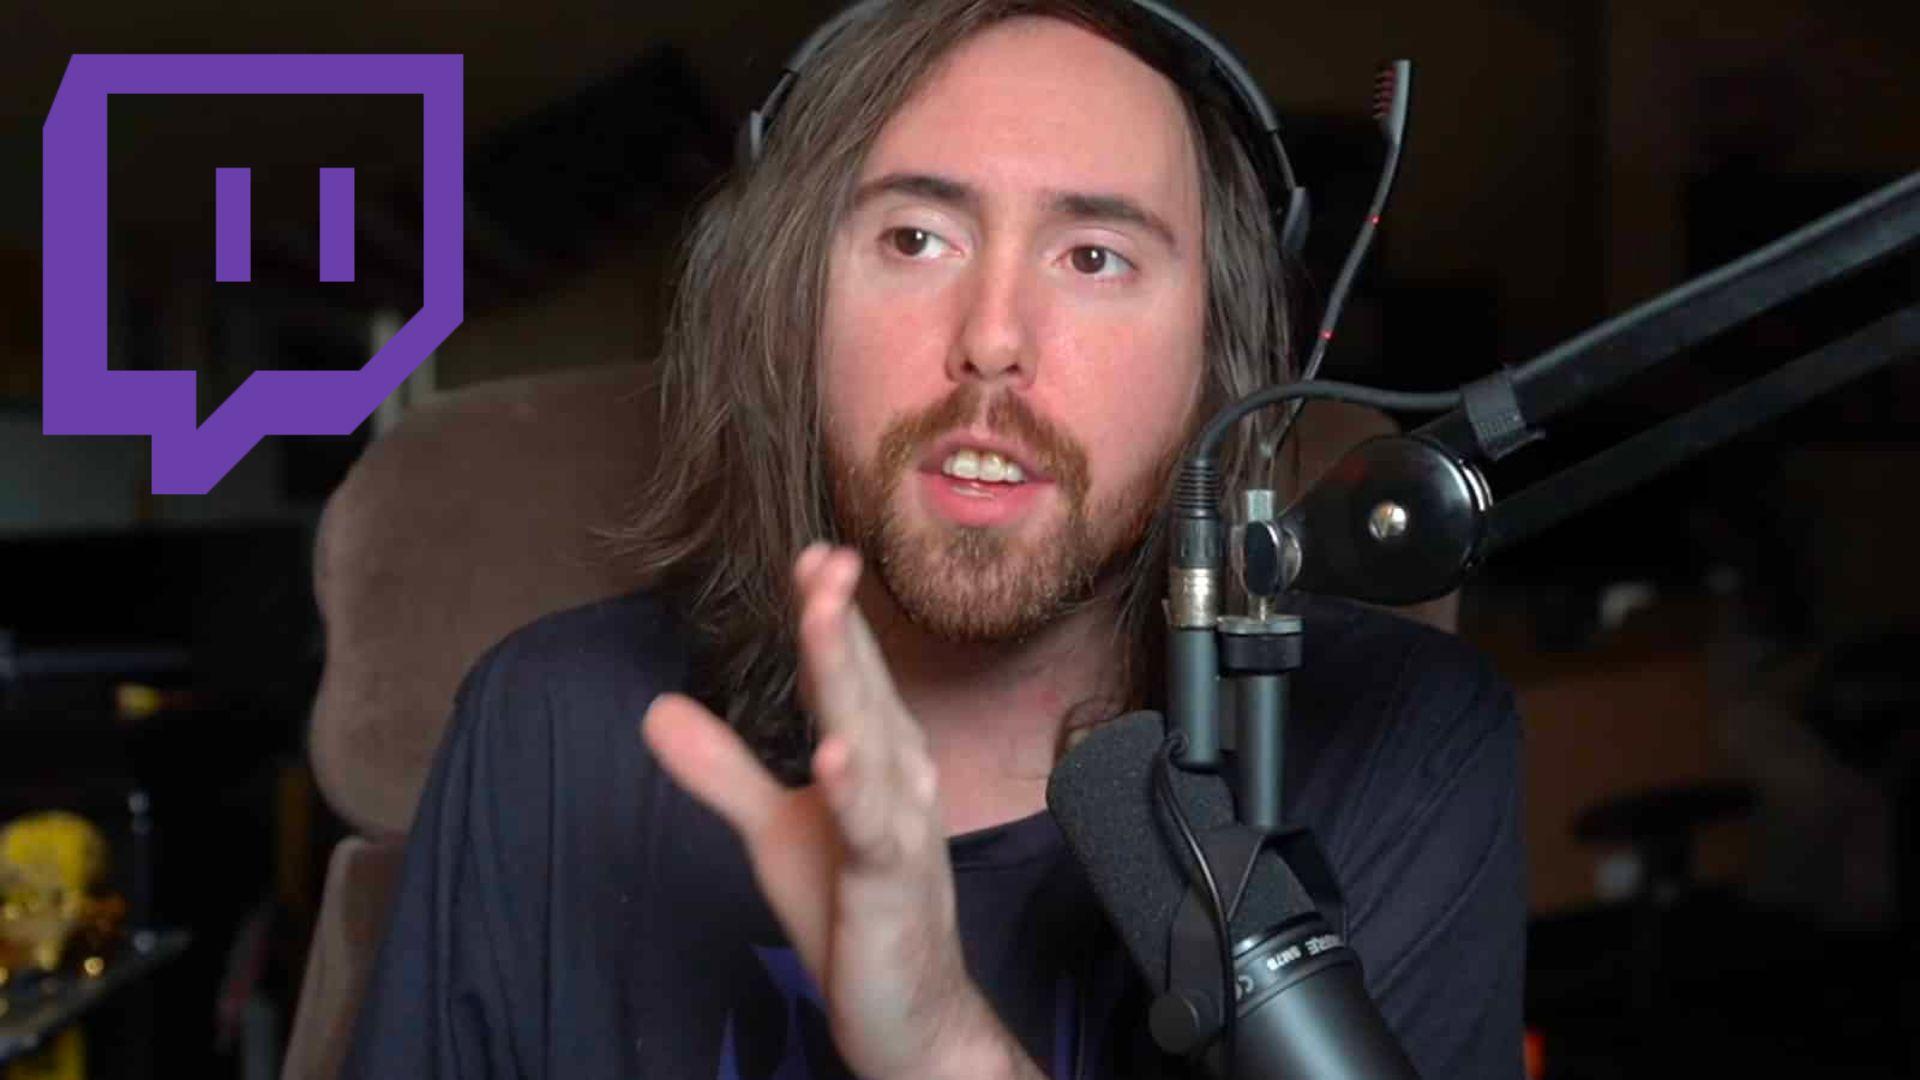 Asmongold talking to camera alongside Twitch logo